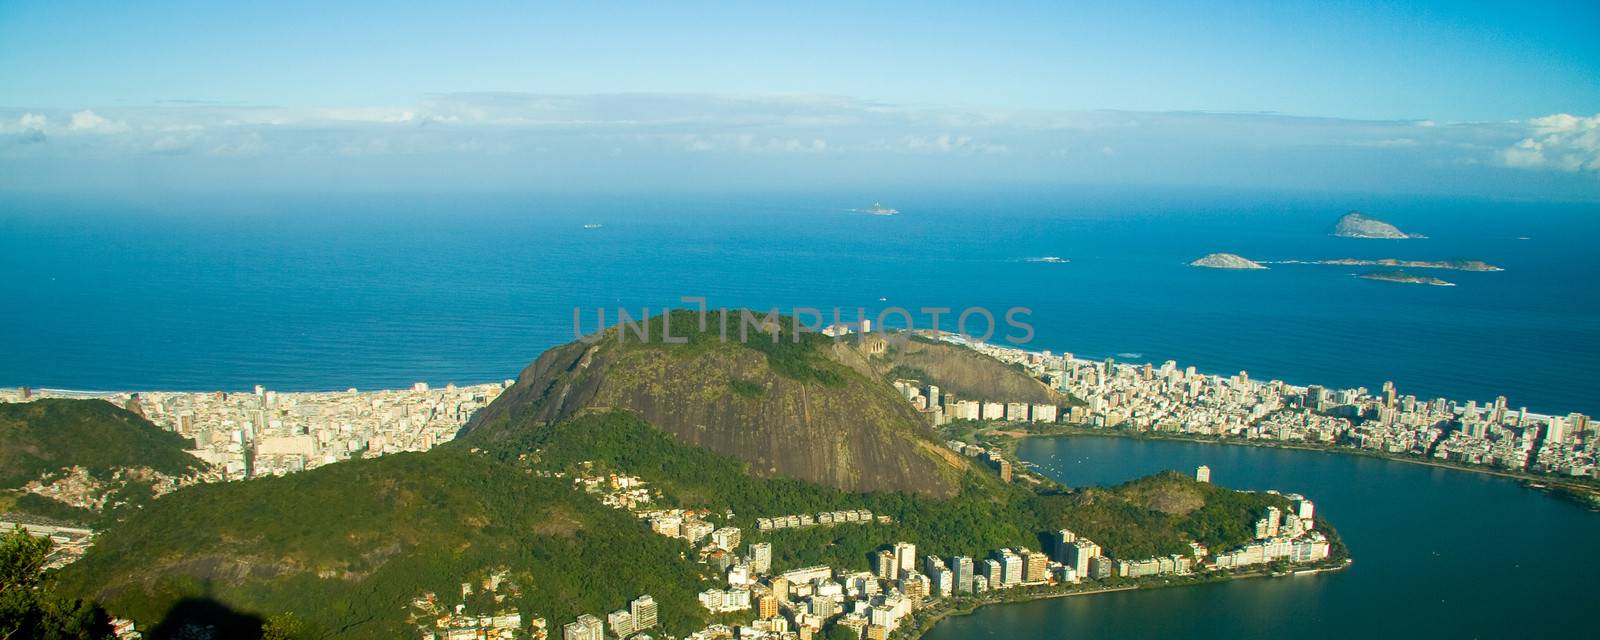 Panoramic aerial view of Rio de Janeiro, Brazil.